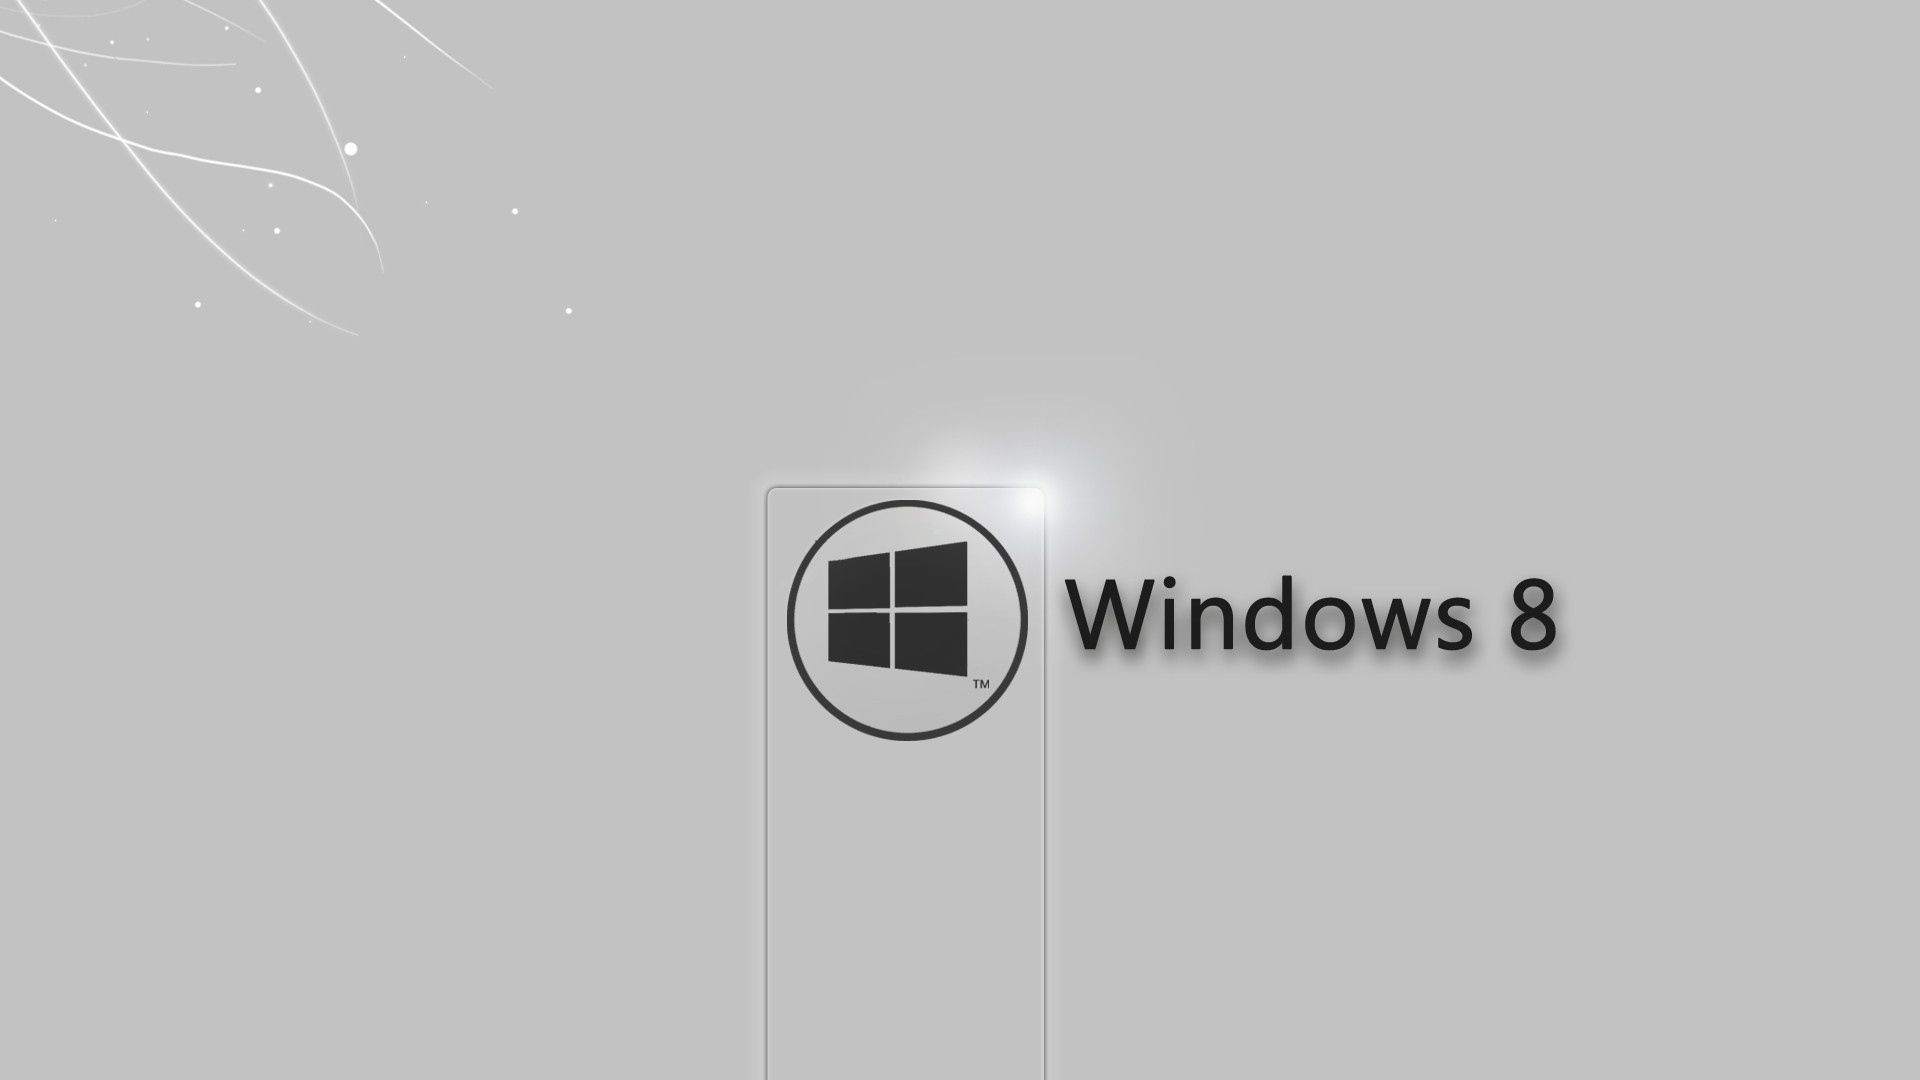 Full HD Wallpaper windows 8 logo background, Desktop Backgrounds ...